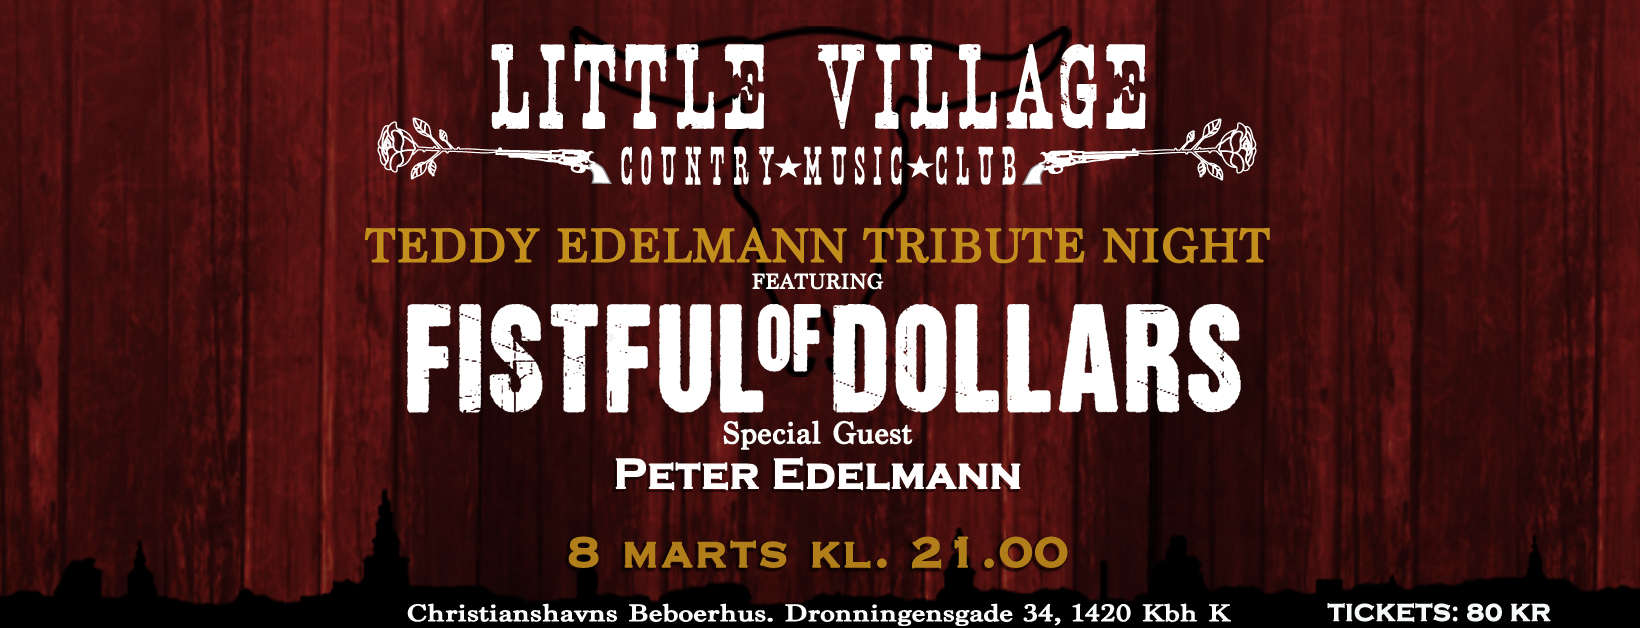 Teddy Edelmann Tribute. Fistful of Dollars feat. Peter Edelmann